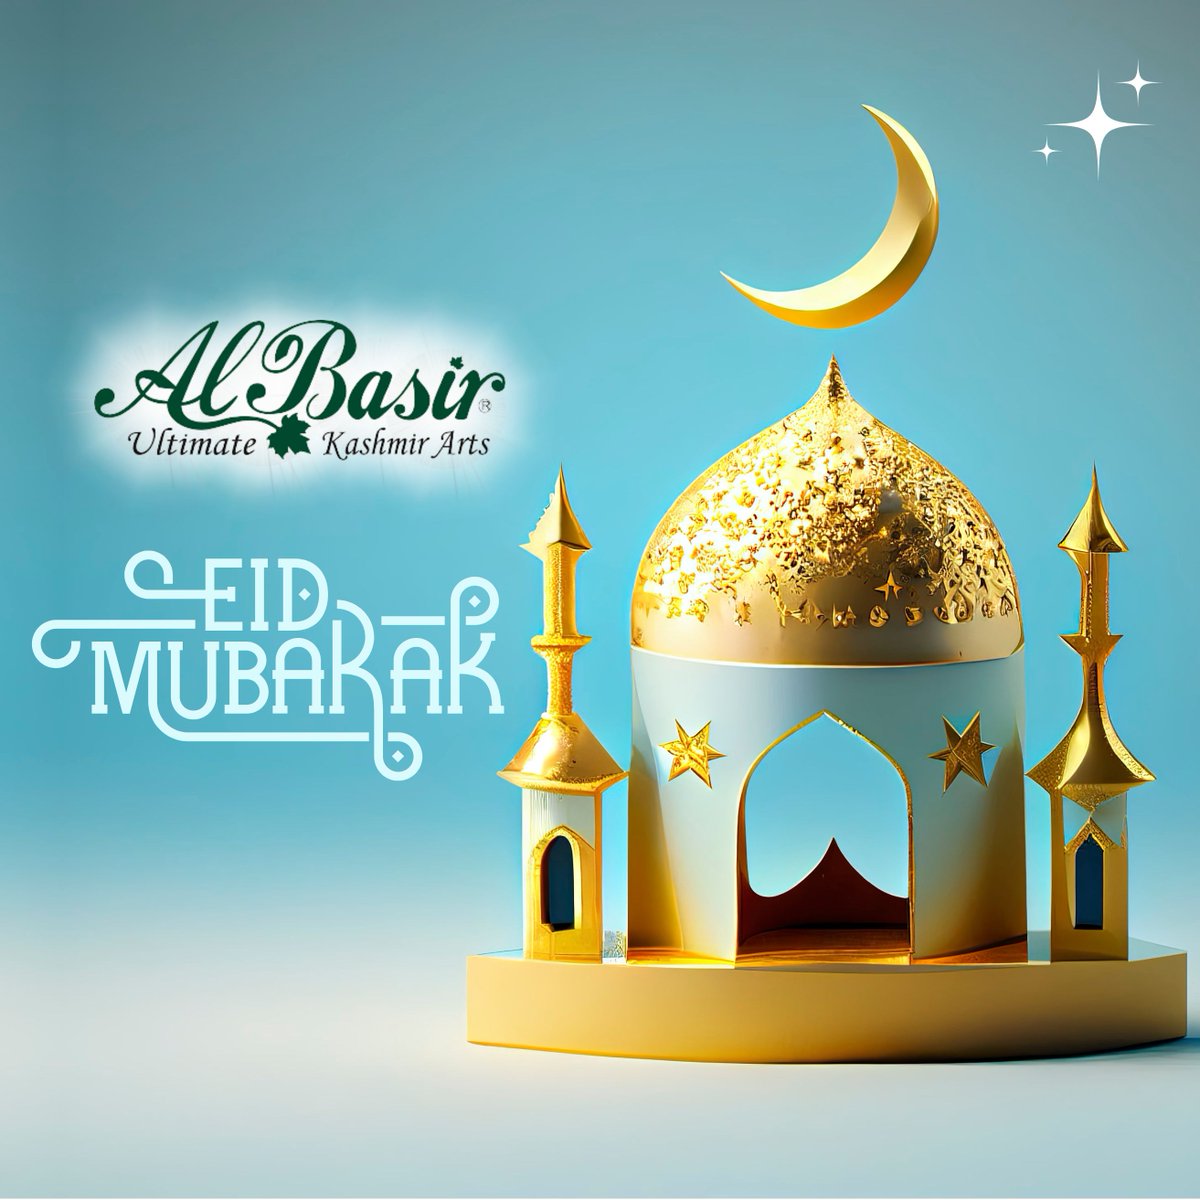 Albasir Group Wishes Eid Mubarak. #eid #eidmubarak #eidcollection #chandigarh💓 #mohali #albasir #kashmir #kashmiri #trendingreels #trending #instagramdaily #Instagram #Instagramvideos #trending #viral #viralvideos #festival